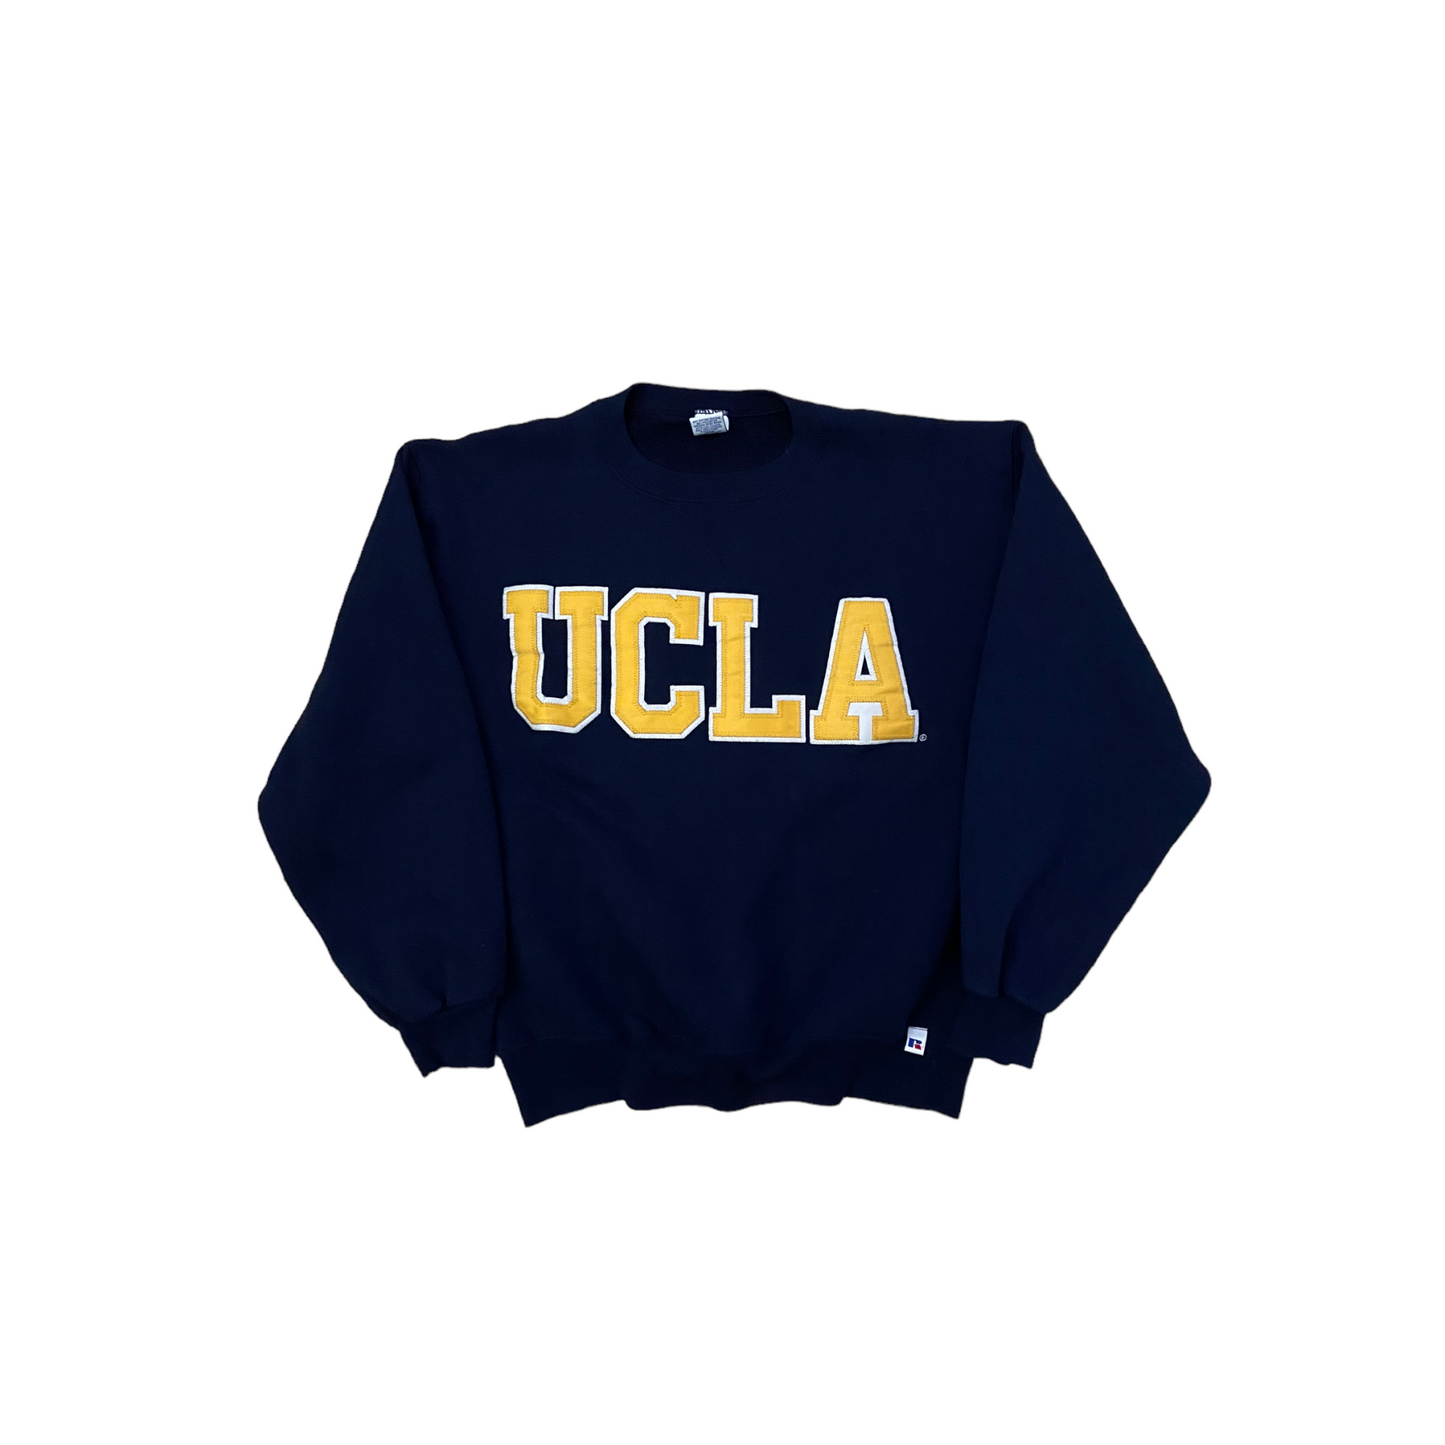 Made in USA - UCLA 90s sweatshirt M